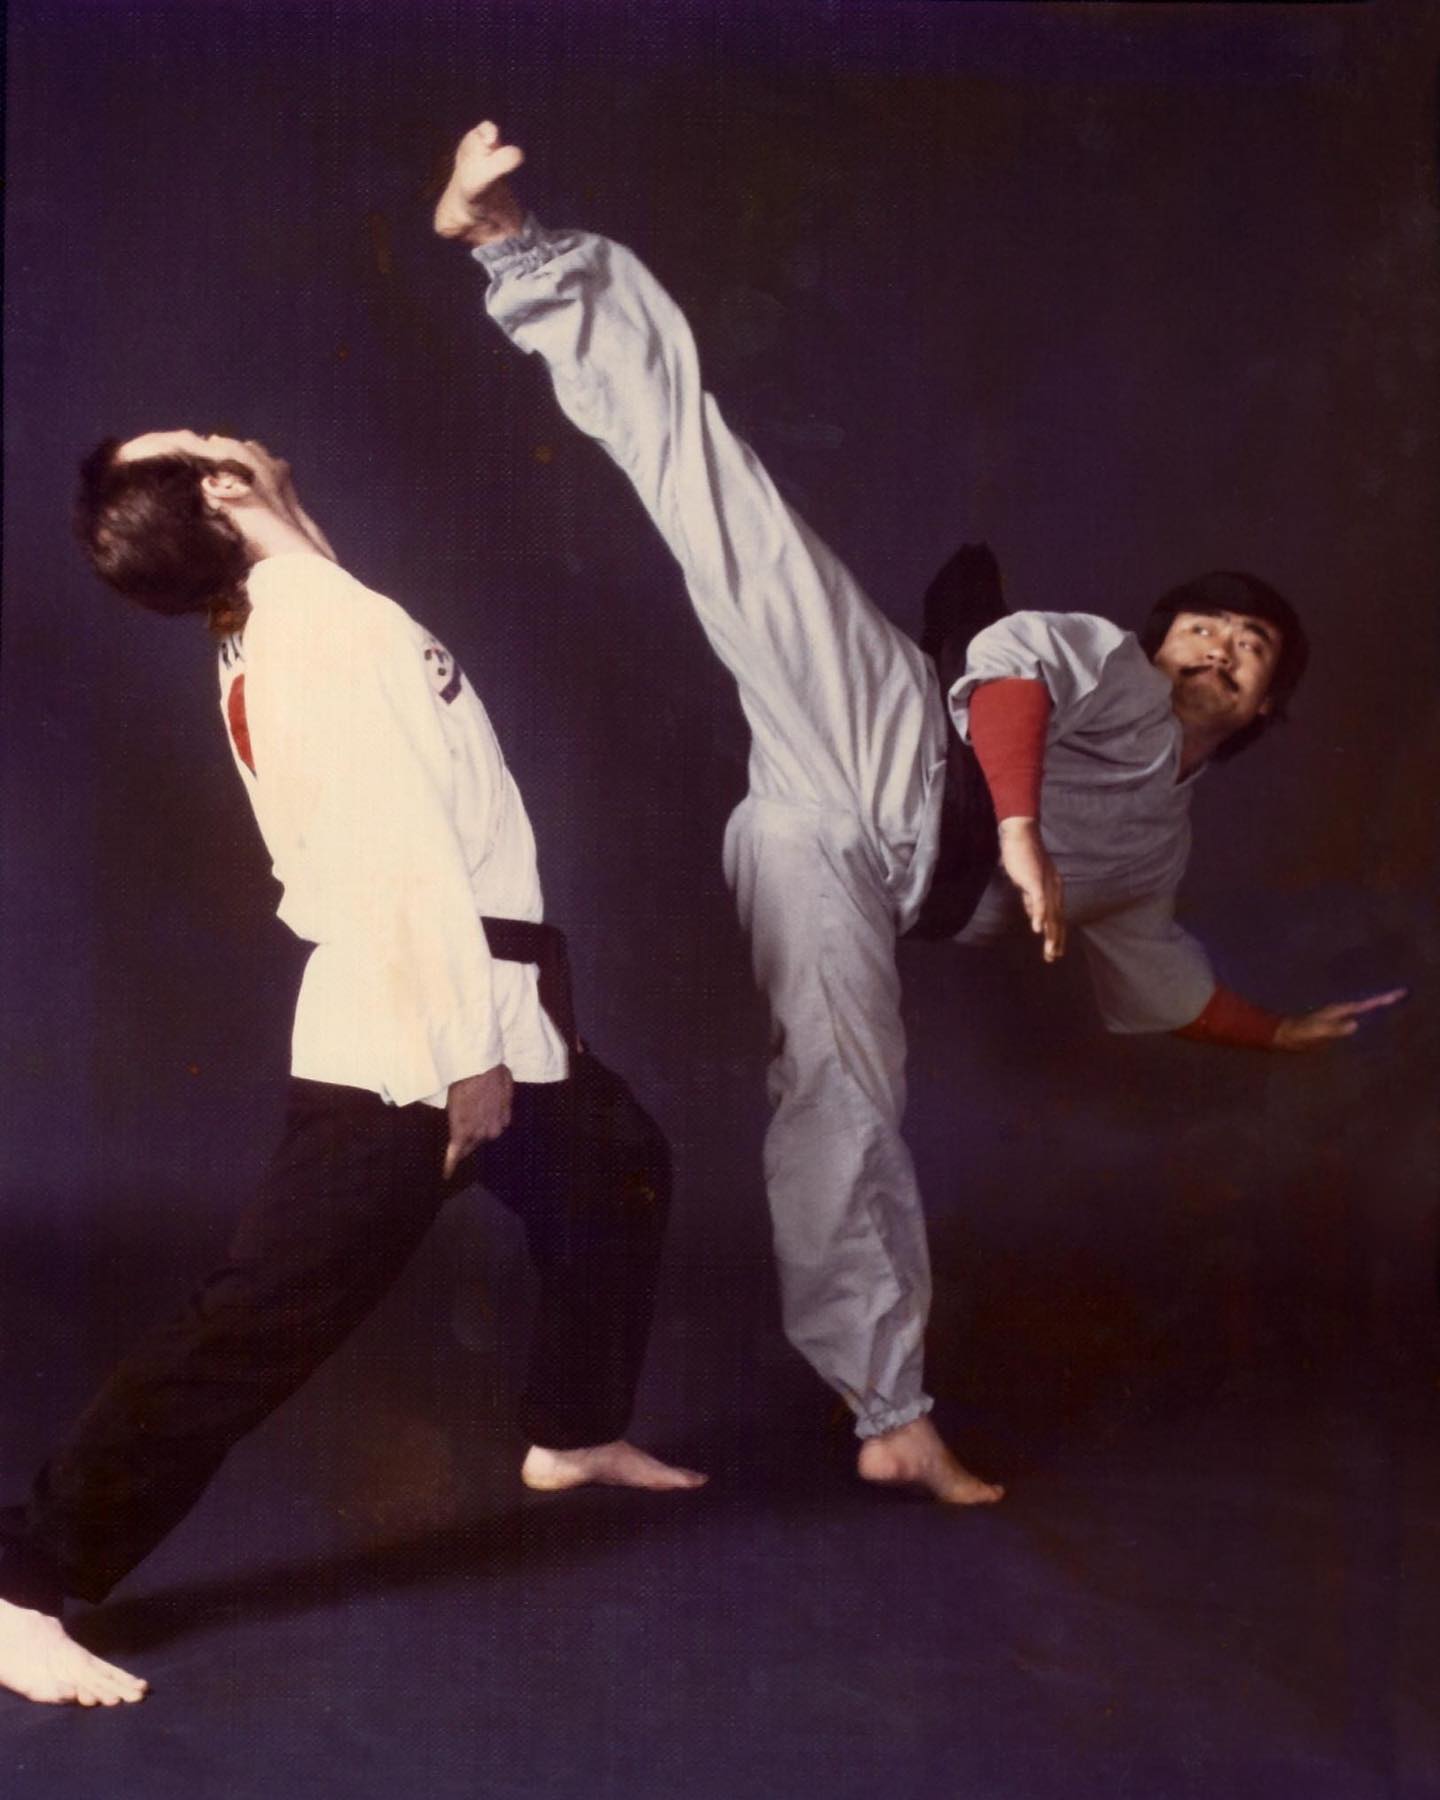 Dojoonim Supreme Grandmaster Dr. Joo Bang Lee performing a heel-hook kick over the head of his opponent #1970s .

#kicks #hwarang #hwarangdo #taesoodo #dojoonim #joobanglee #martialarts #korean #koreanmartialarts #founder #tbt #화랑 #화랑도 #도주 #이주방